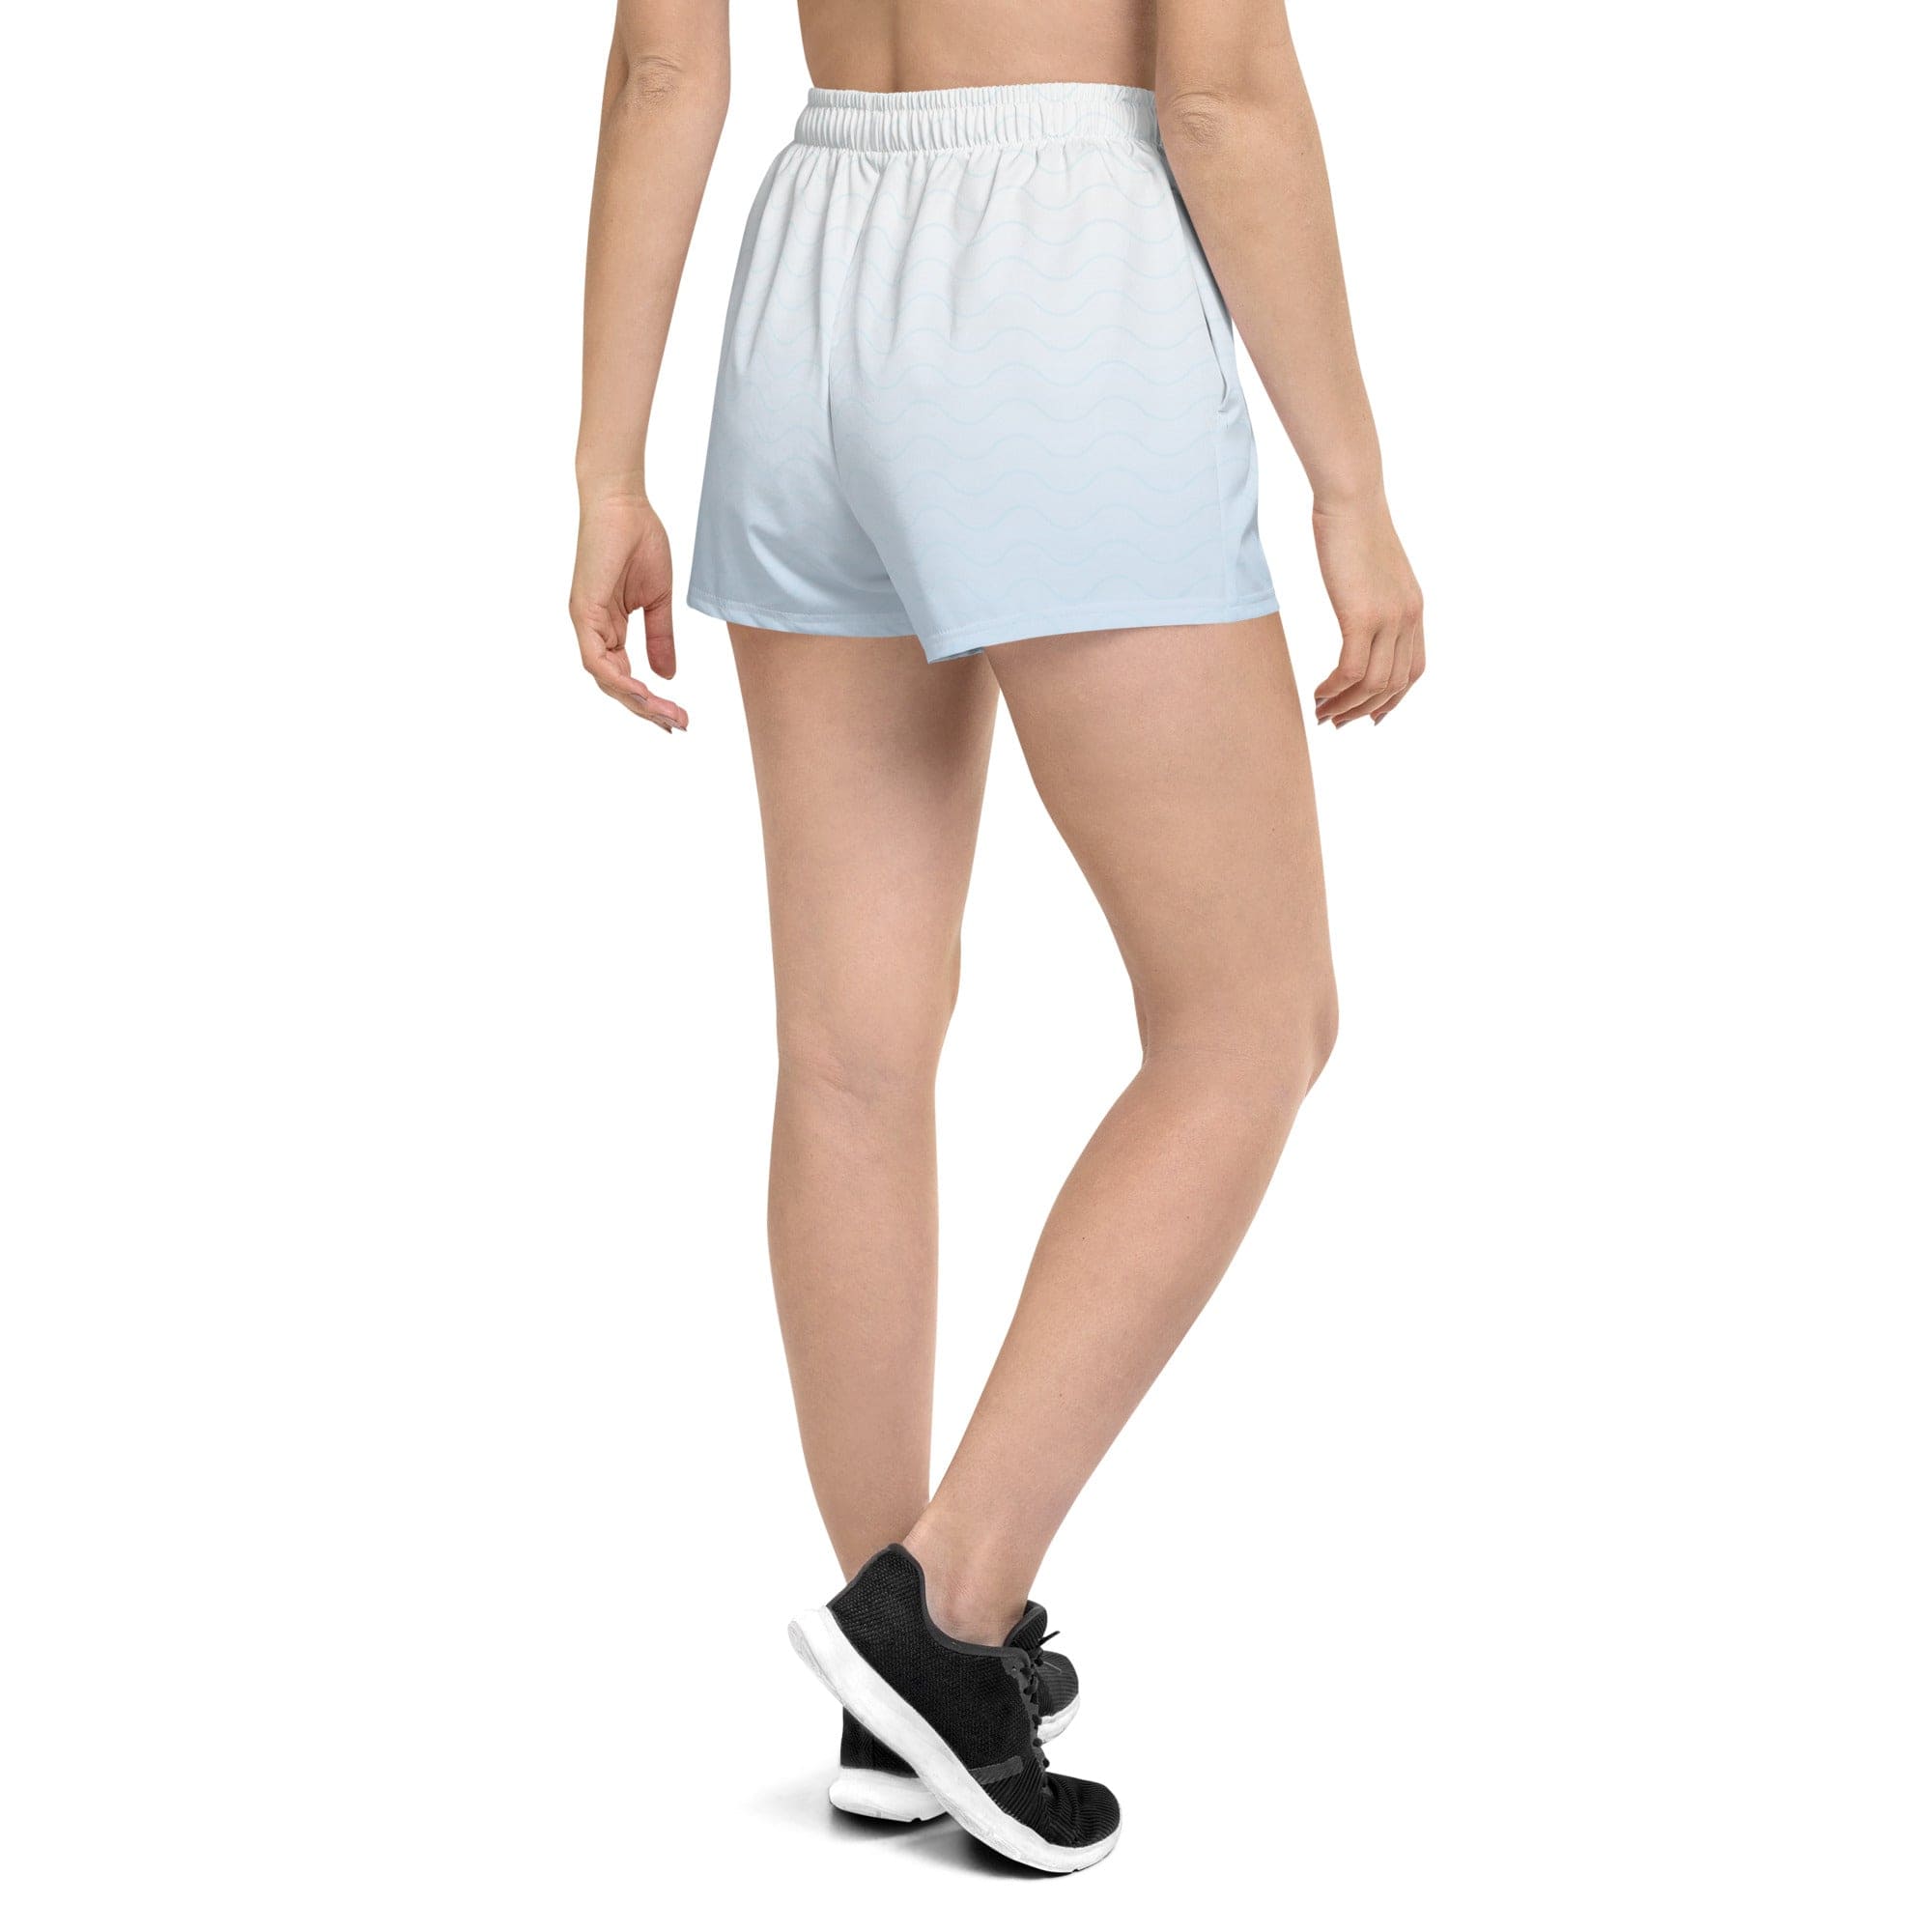 White women's athletic shorts with black Fire Cornhole logo